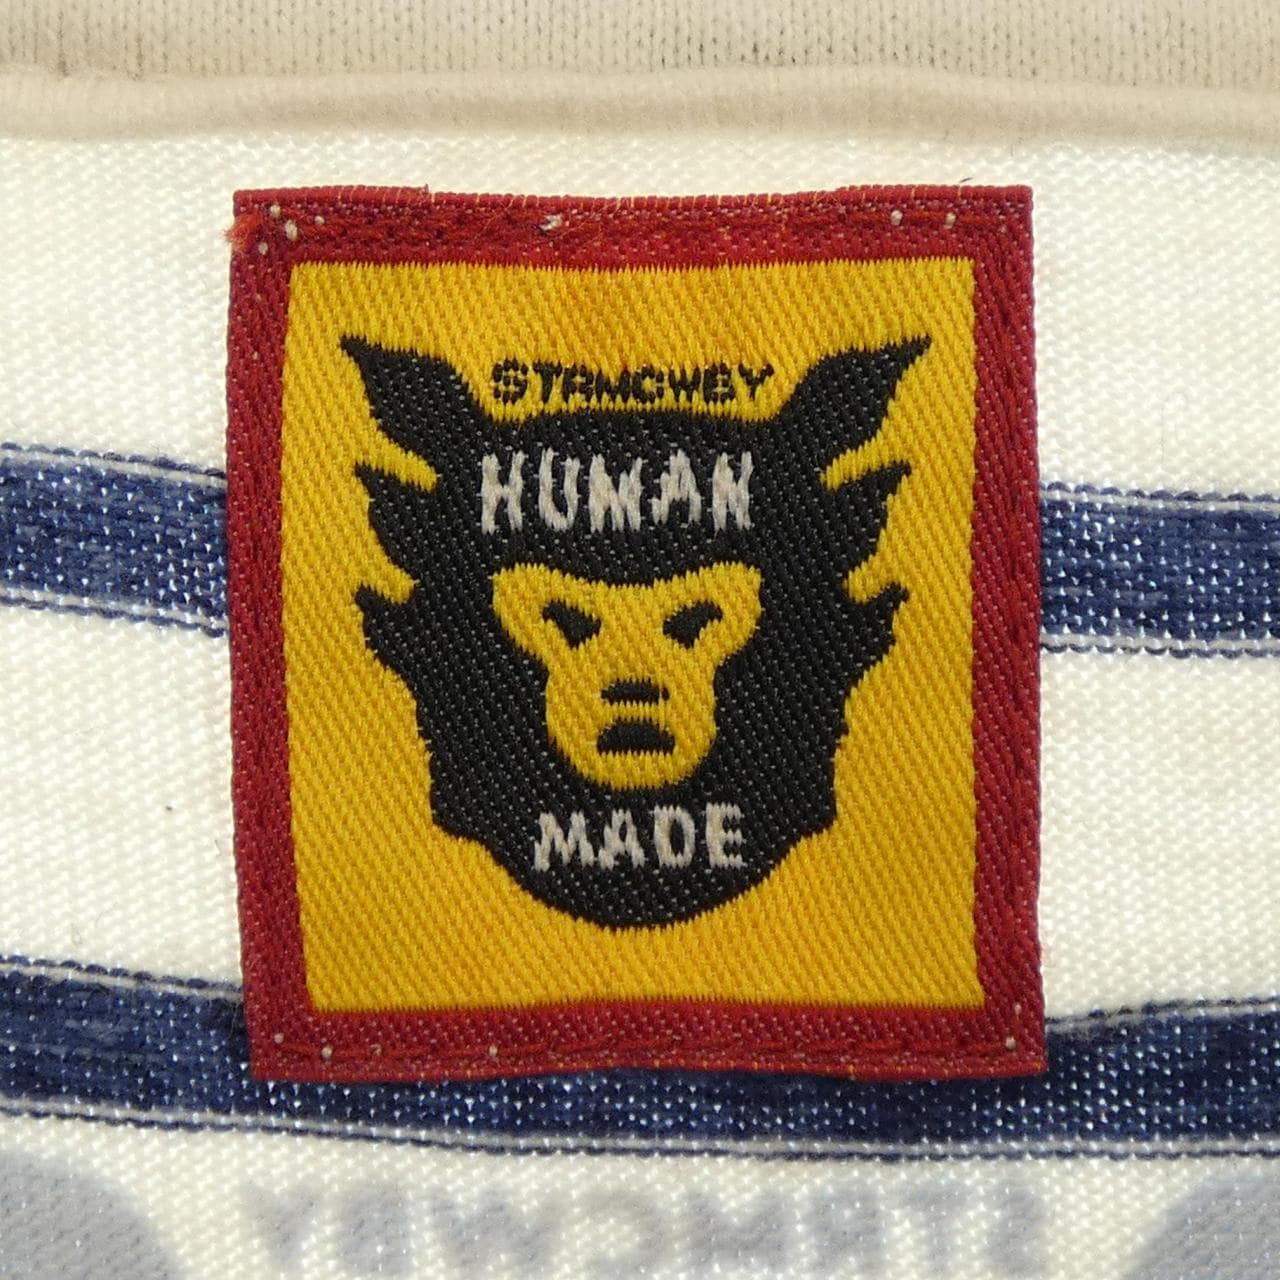 HUMAN MADE T-shirt